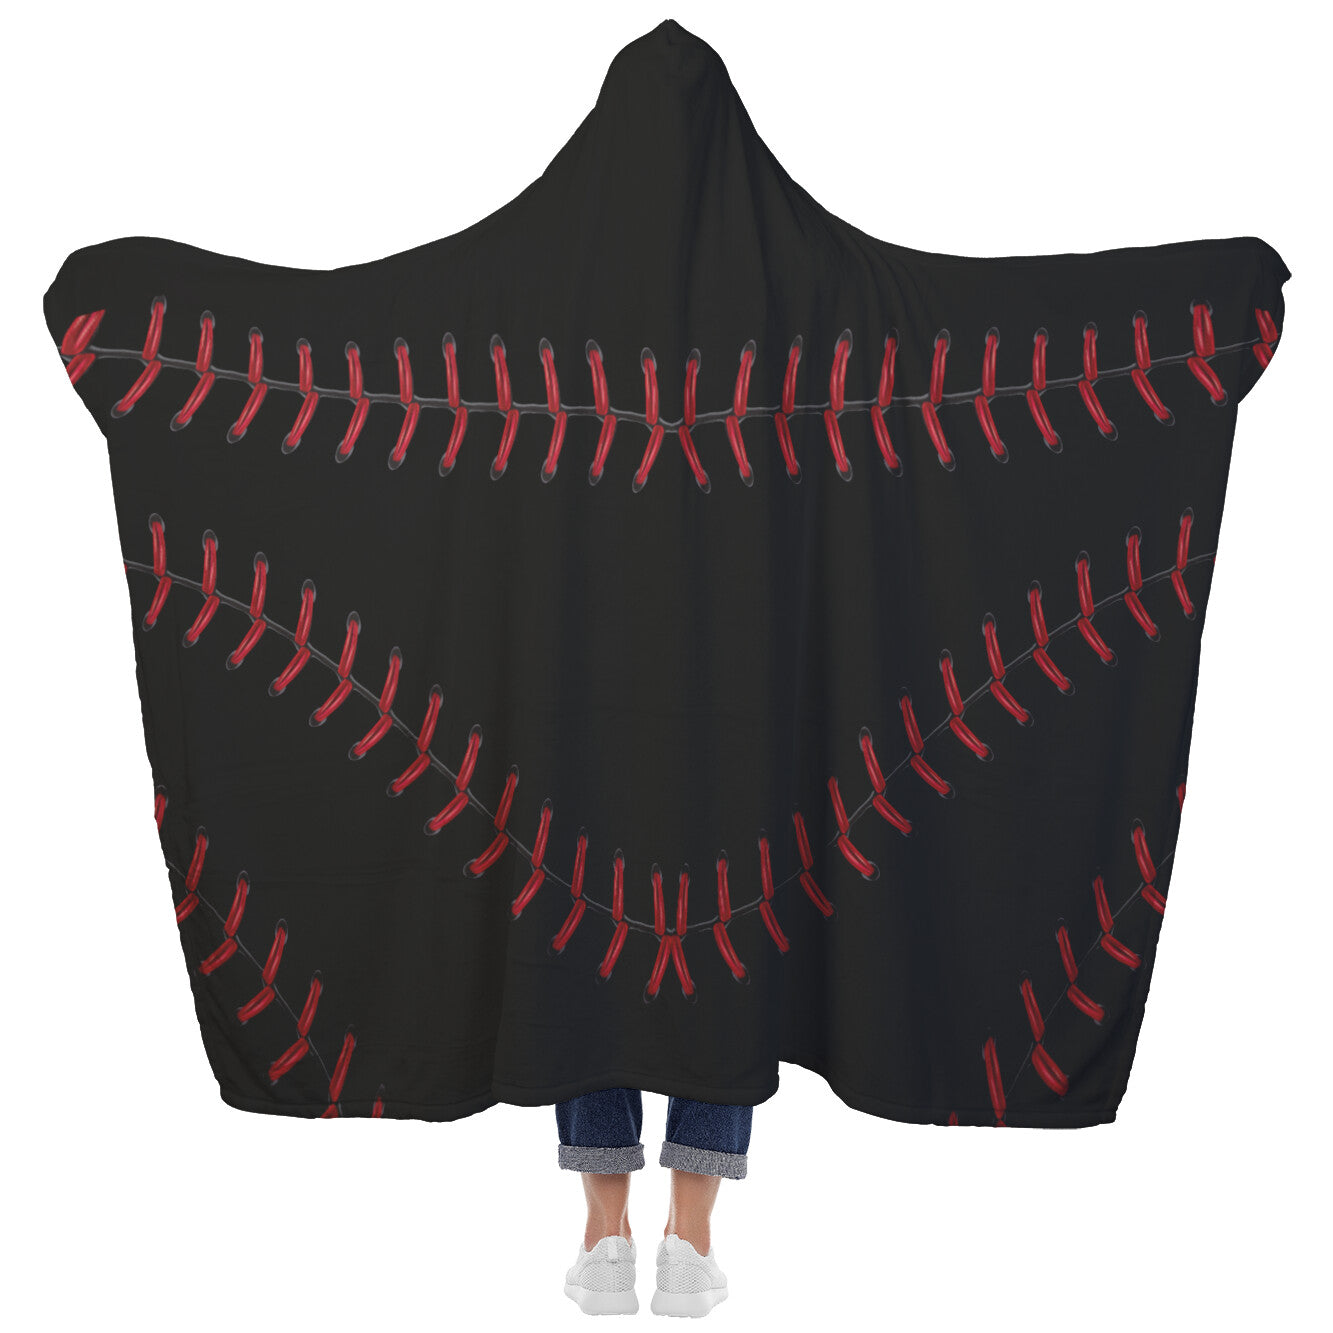 Black Baseball Stitch Hooded Blanket